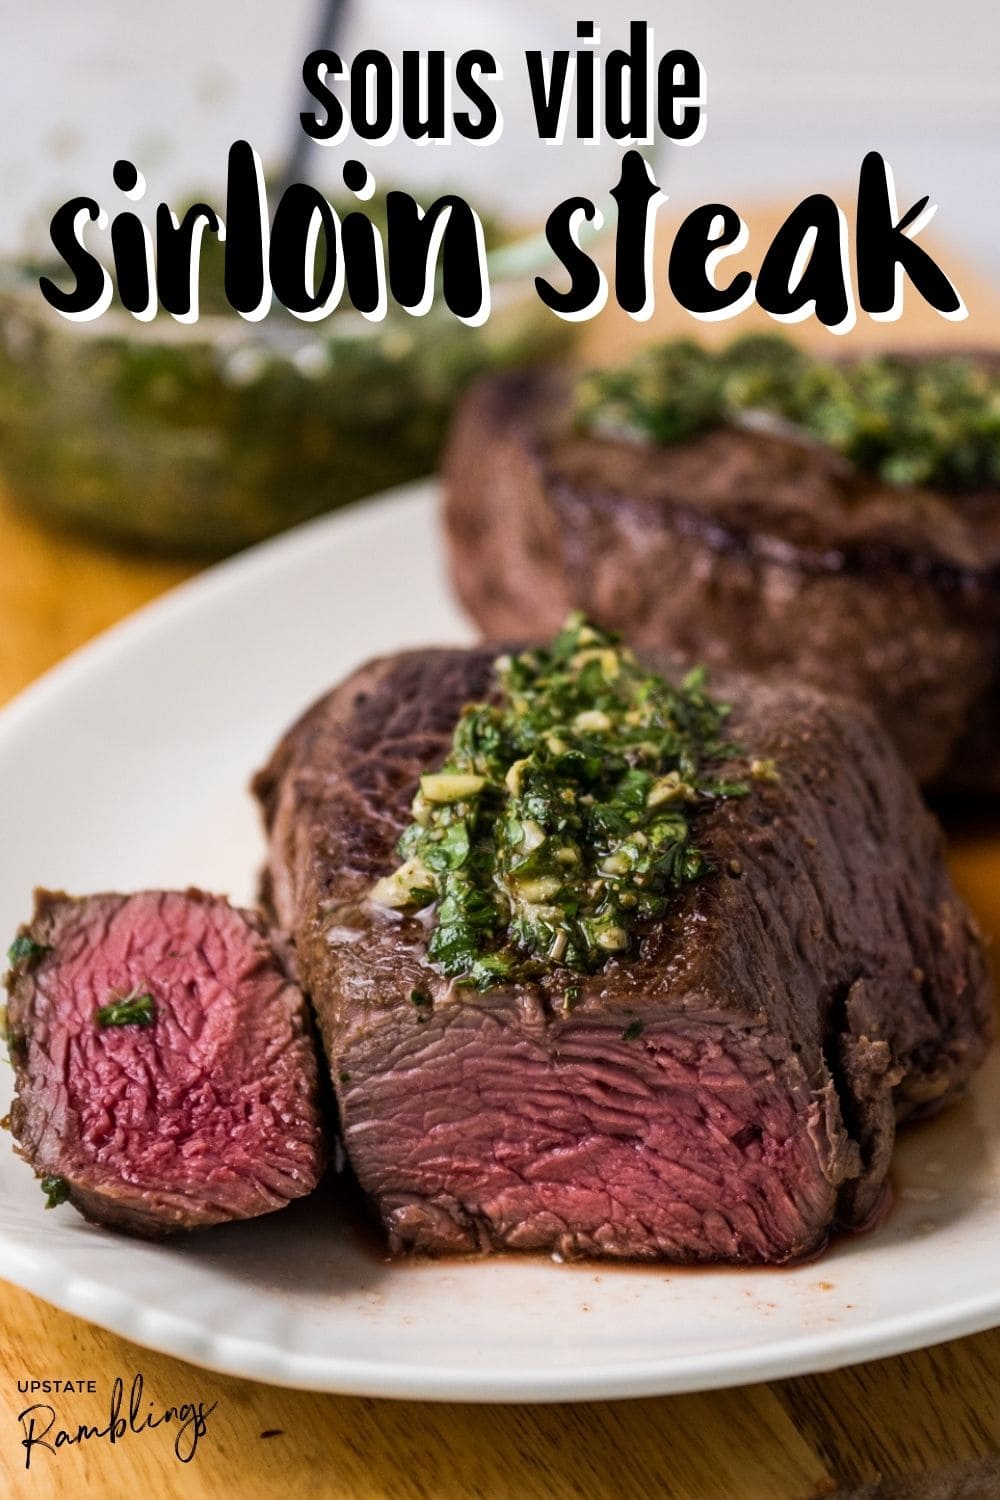 https://www.upstateramblings.com/wp-content/uploads/2021/02/sirloin-steak.jpg